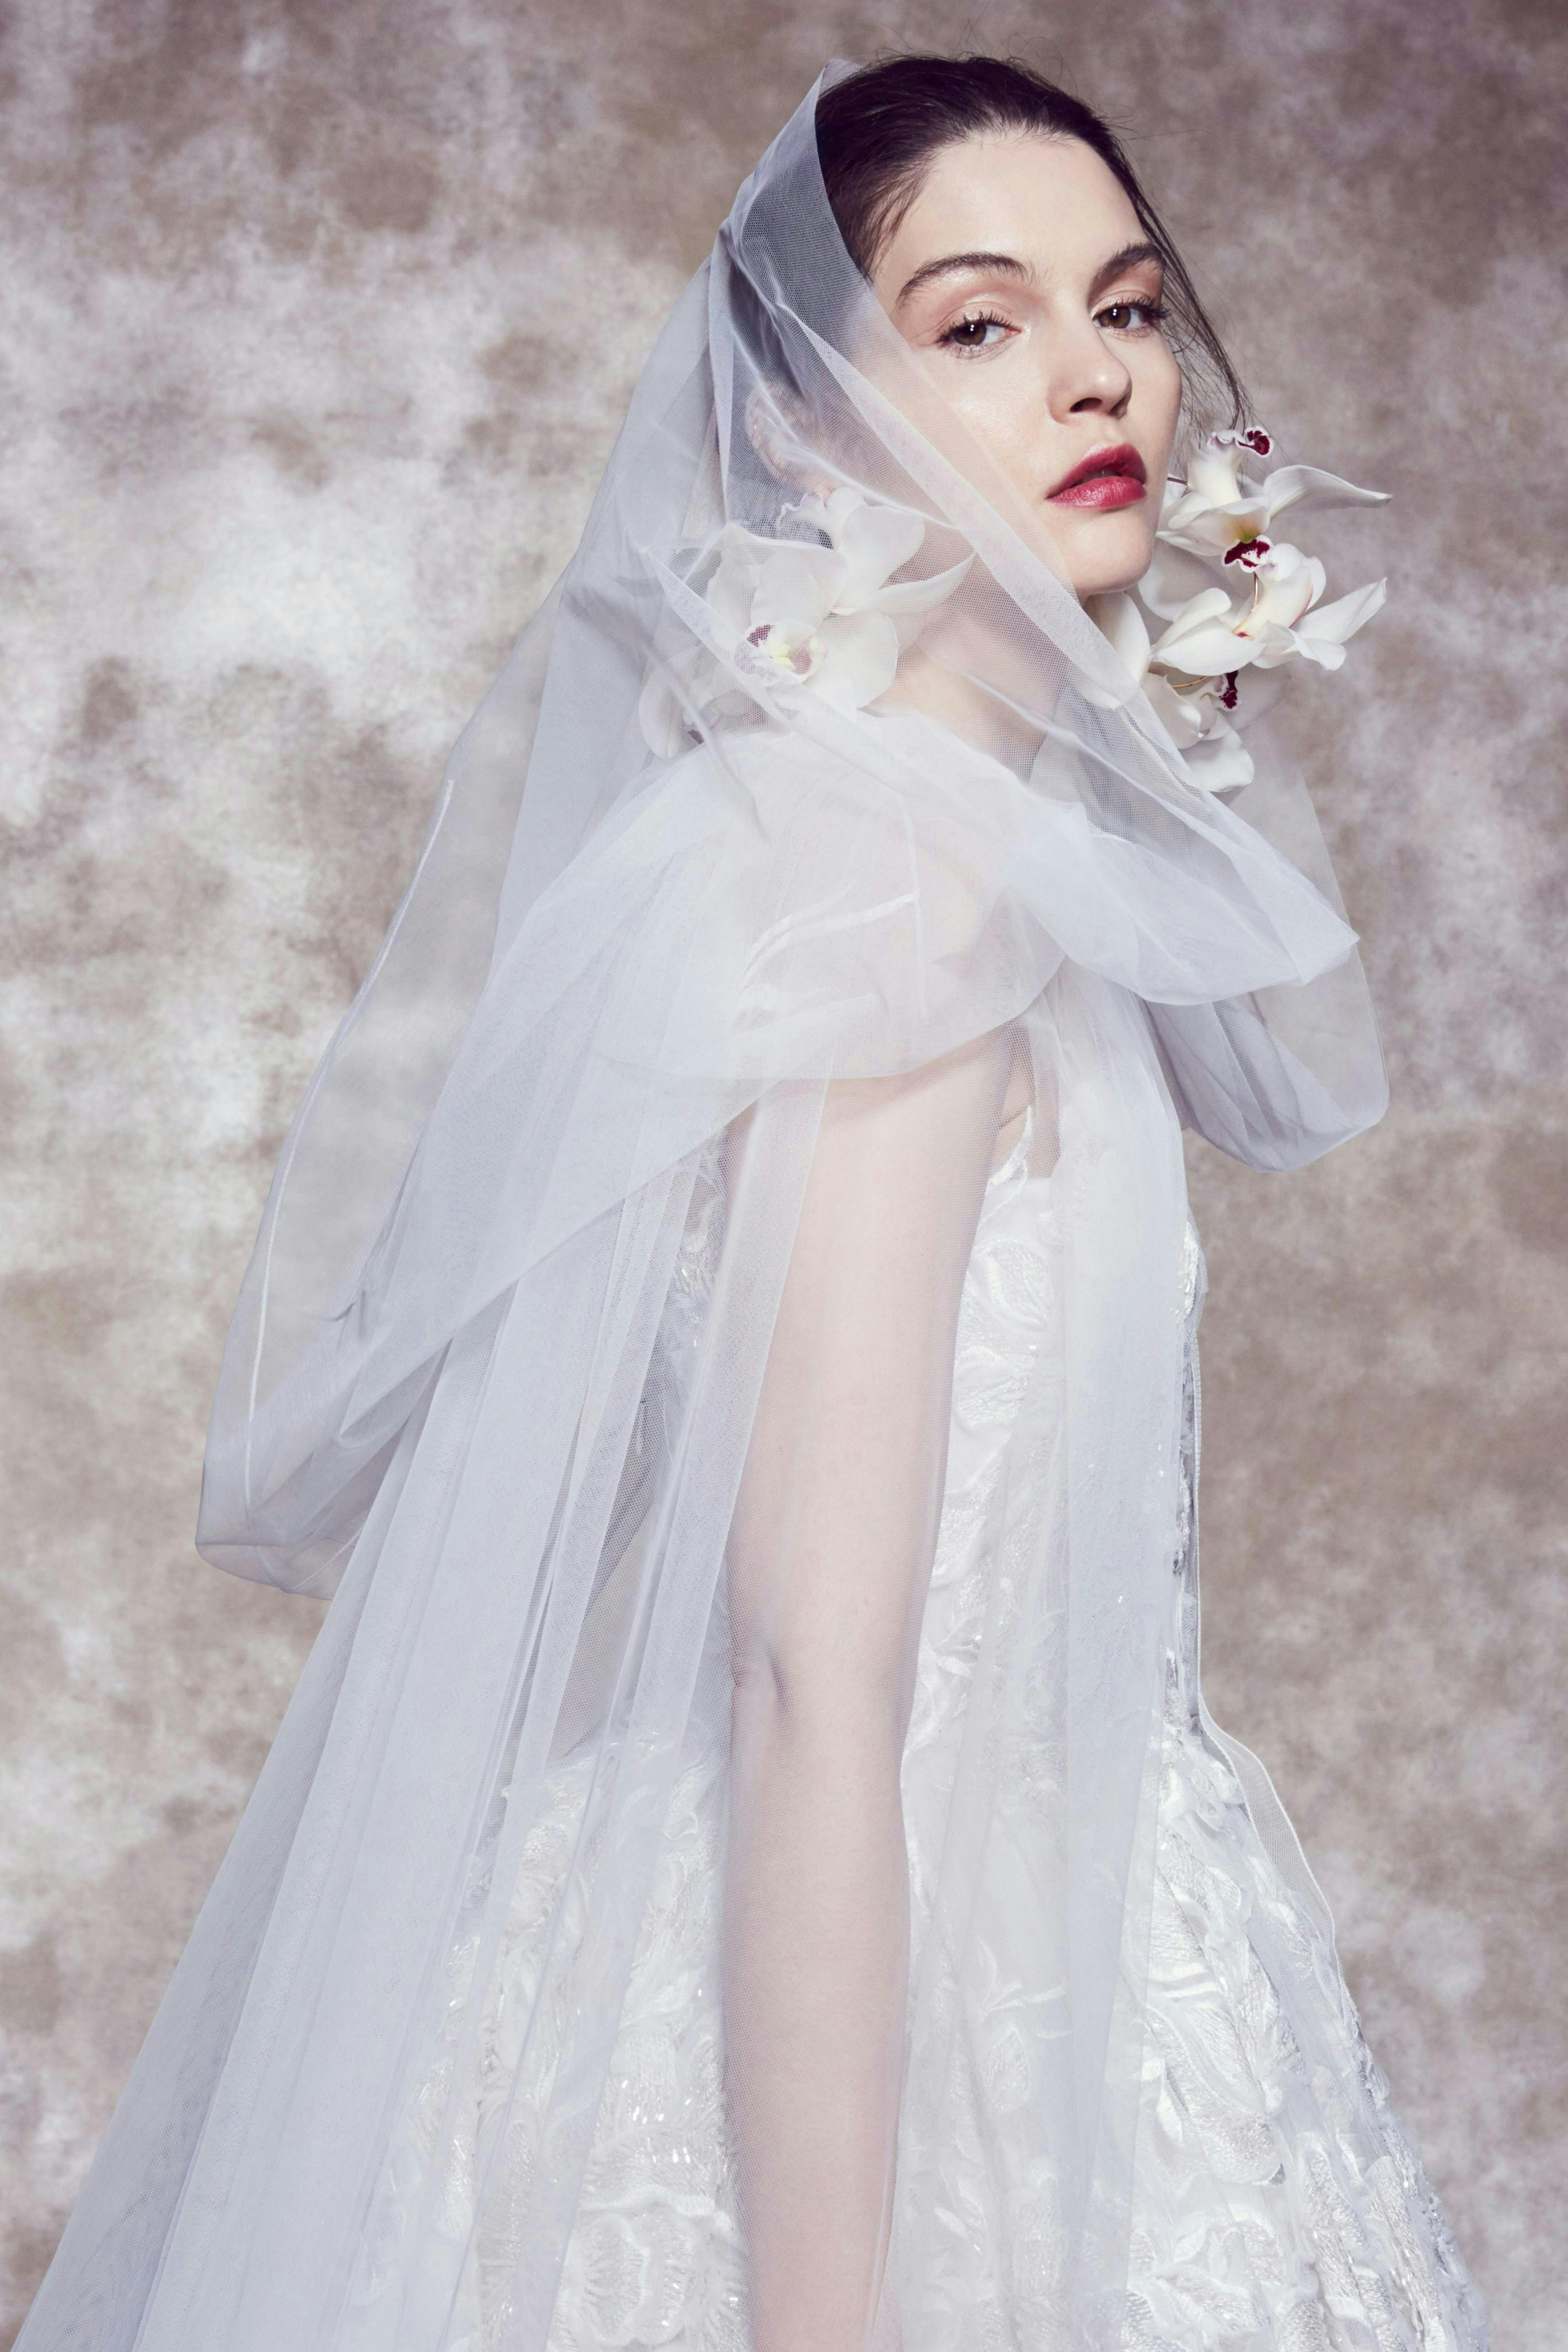 clothing apparel wedding gown fashion wedding gown robe veil person human